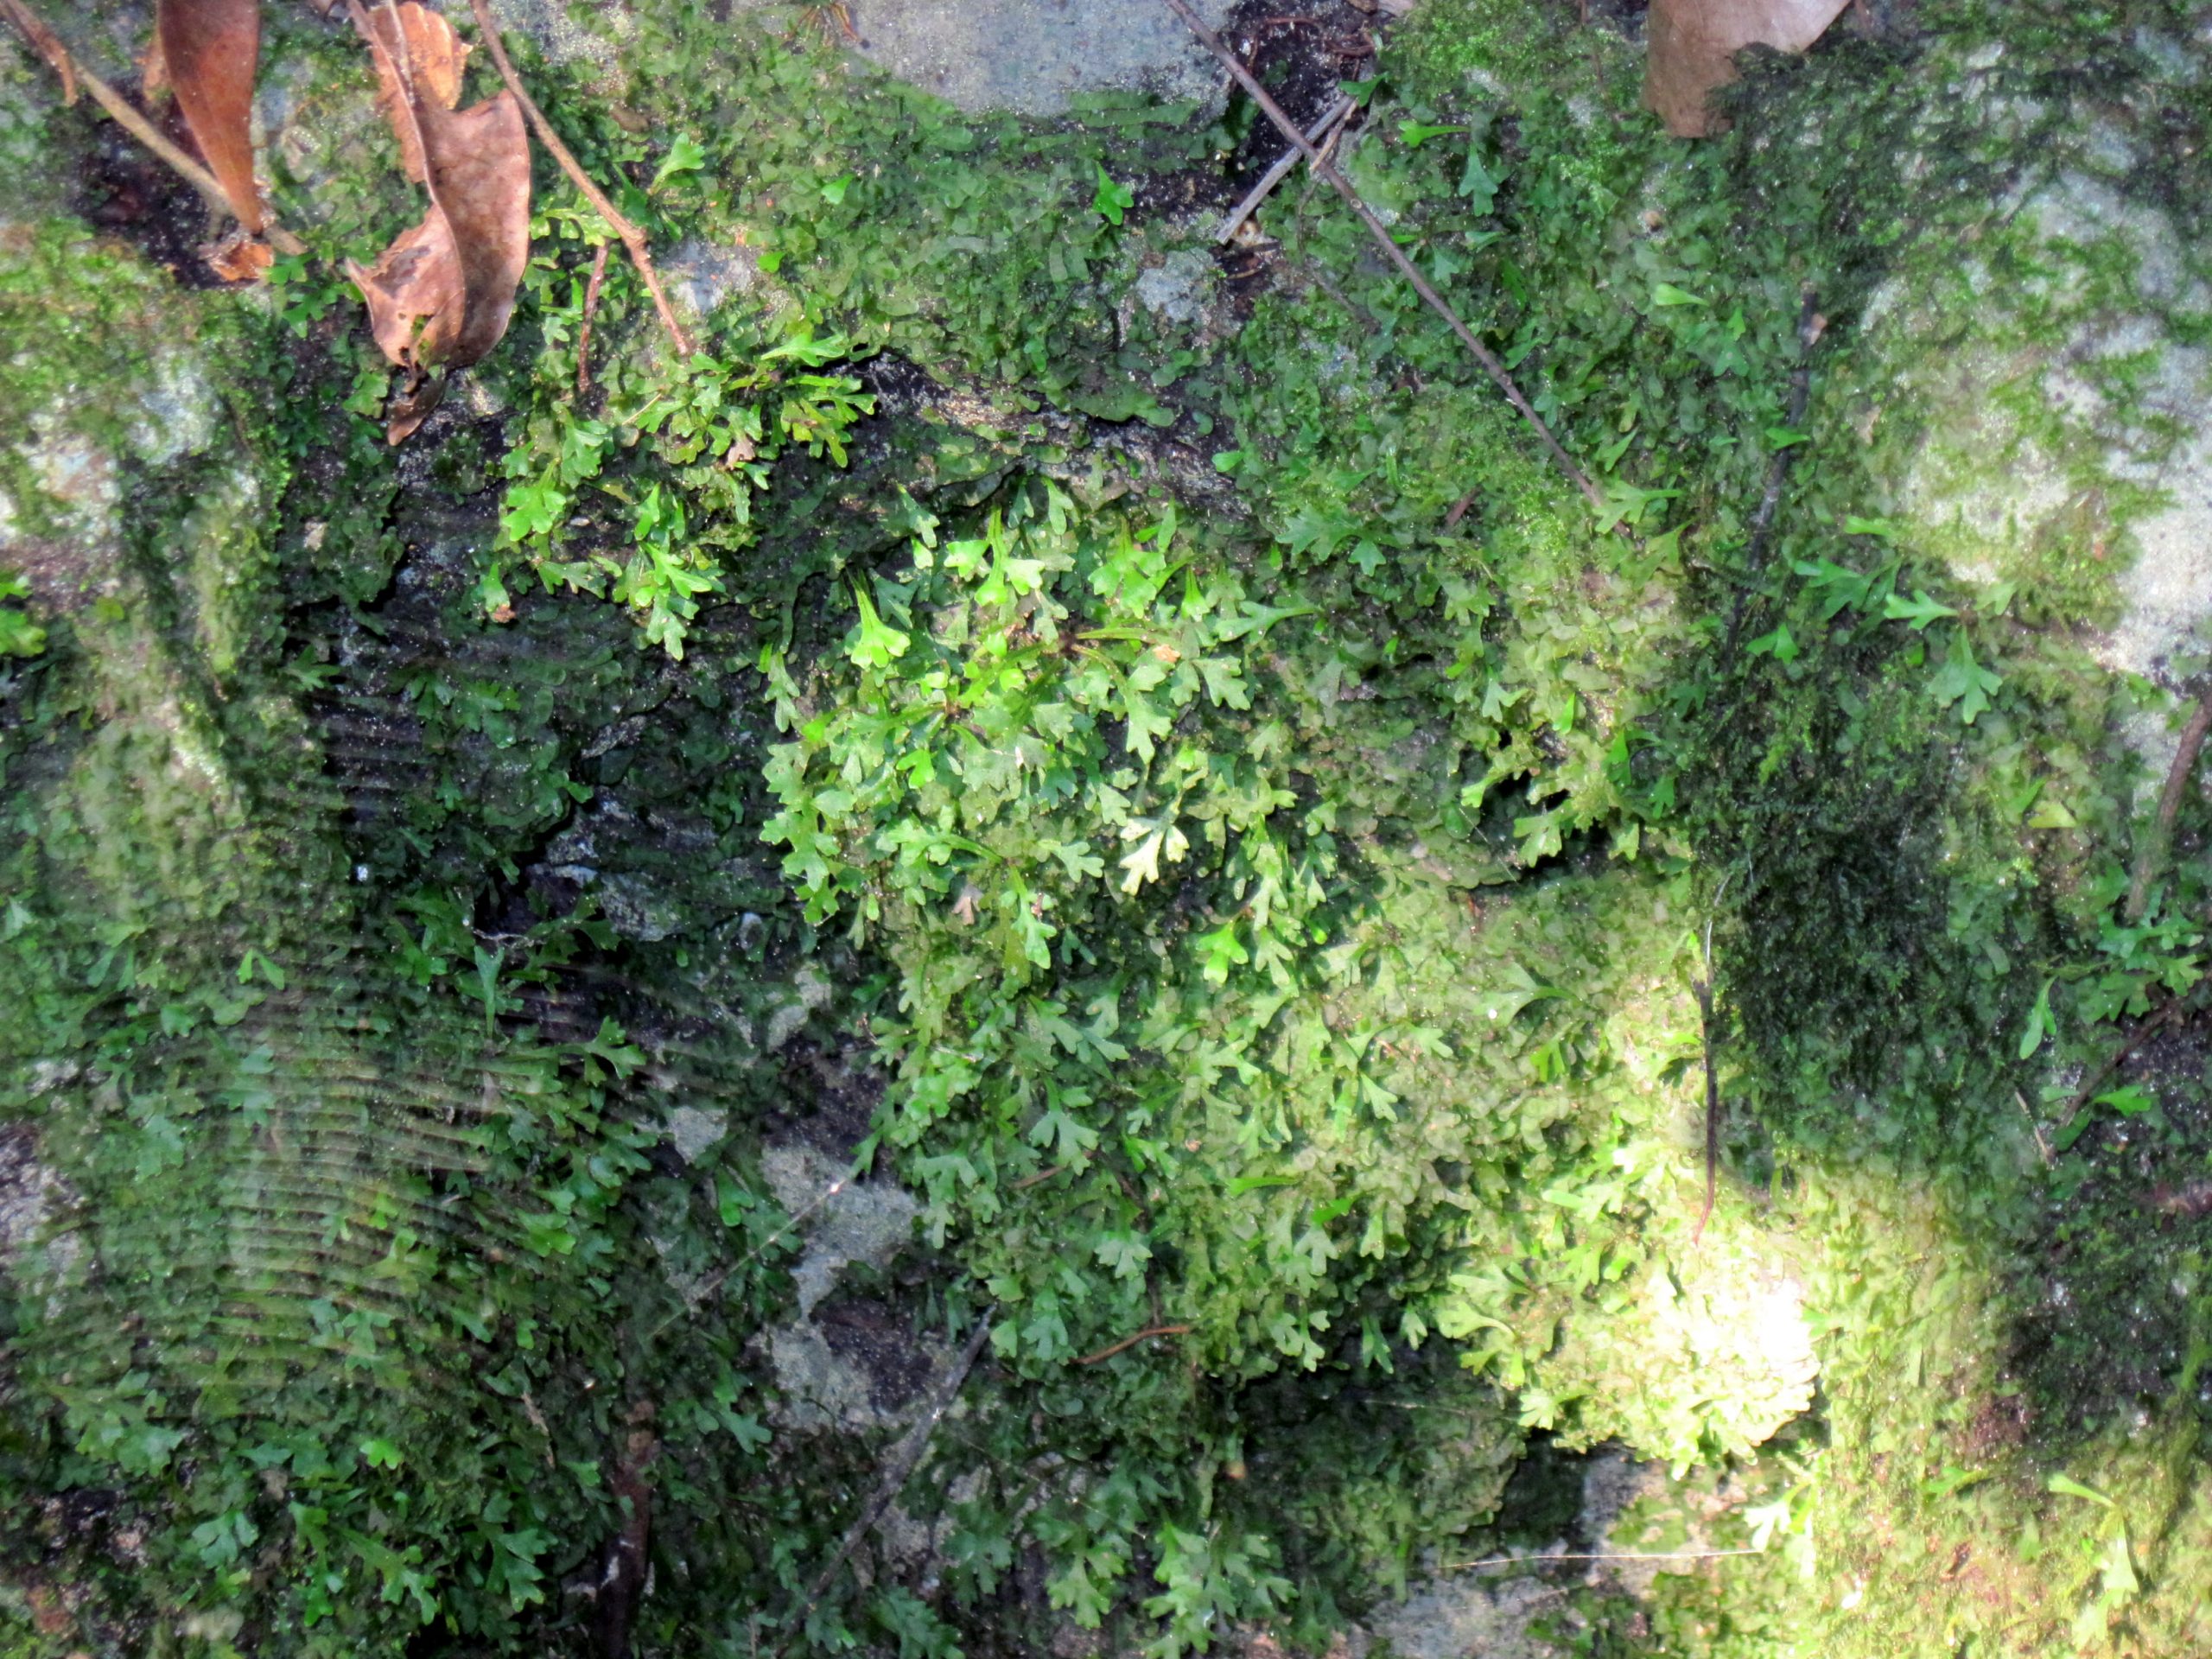 Juveniles of the rare holly leaf fern (Lomariopsis kunzeana).